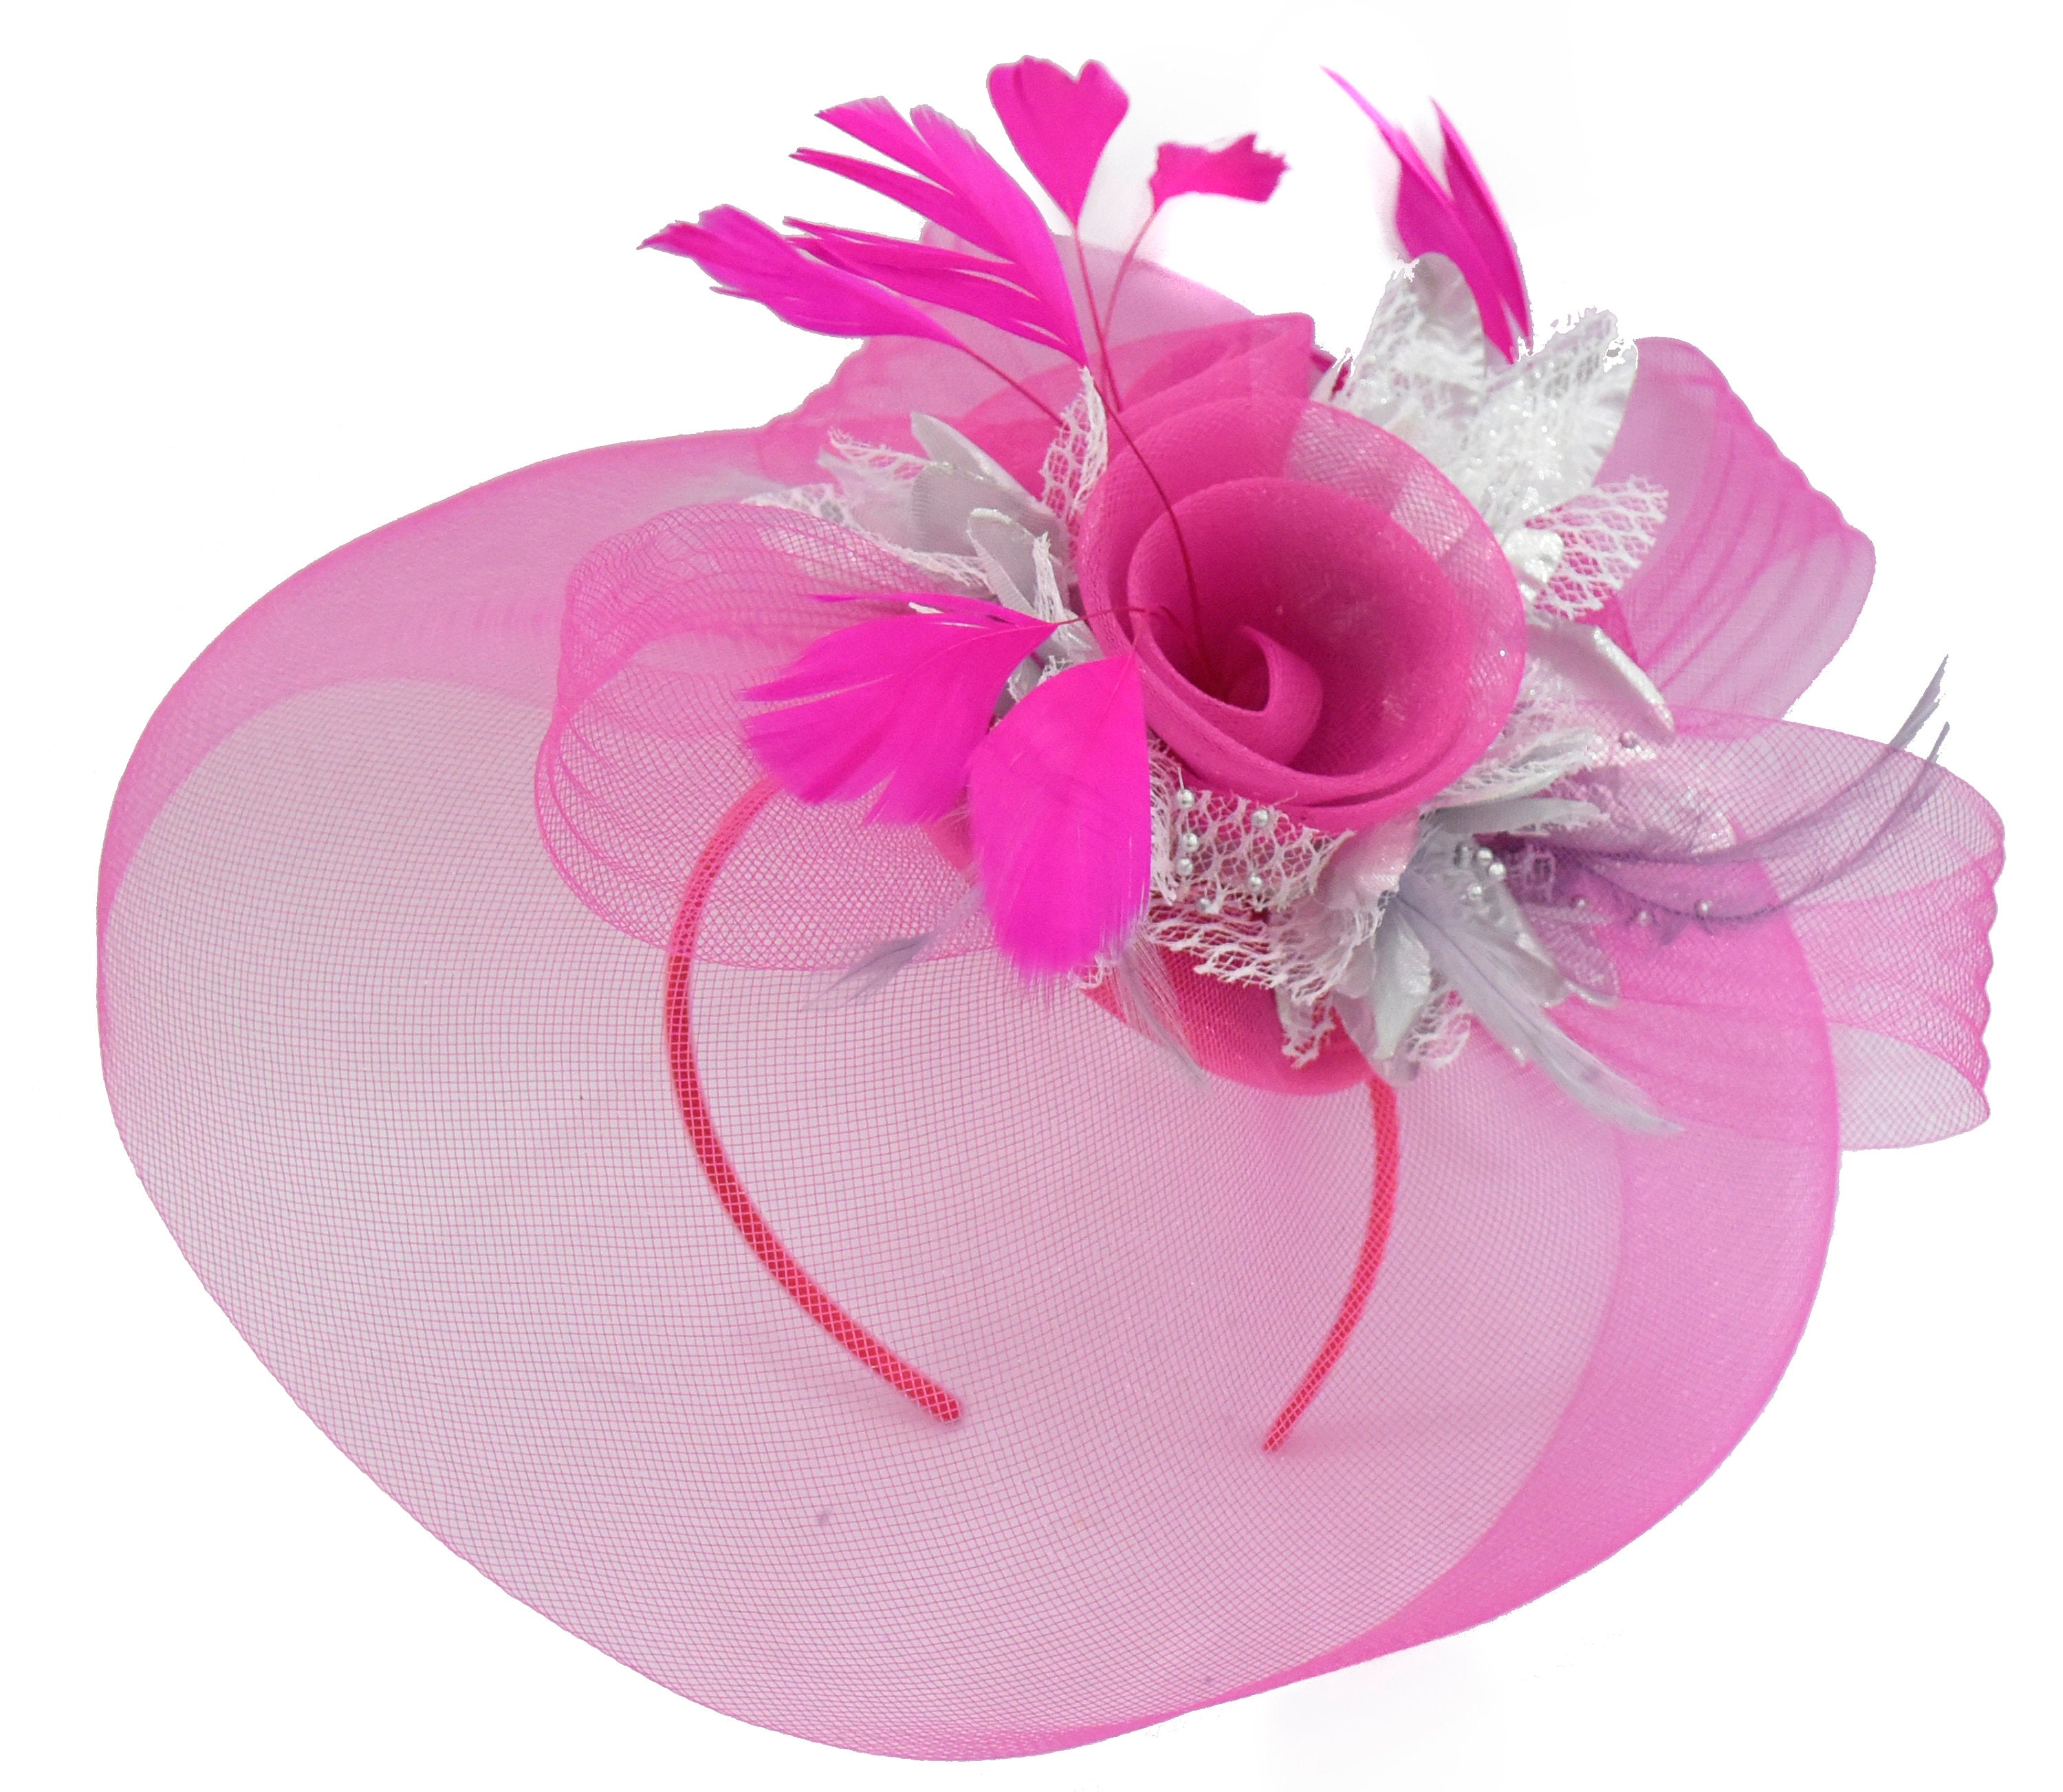 Caprilite Fuchsia Hot Pink and Silver Fascinator Hat Veil Net Hair Clip Ascot Derby Races Wedding Headband Feather Flower